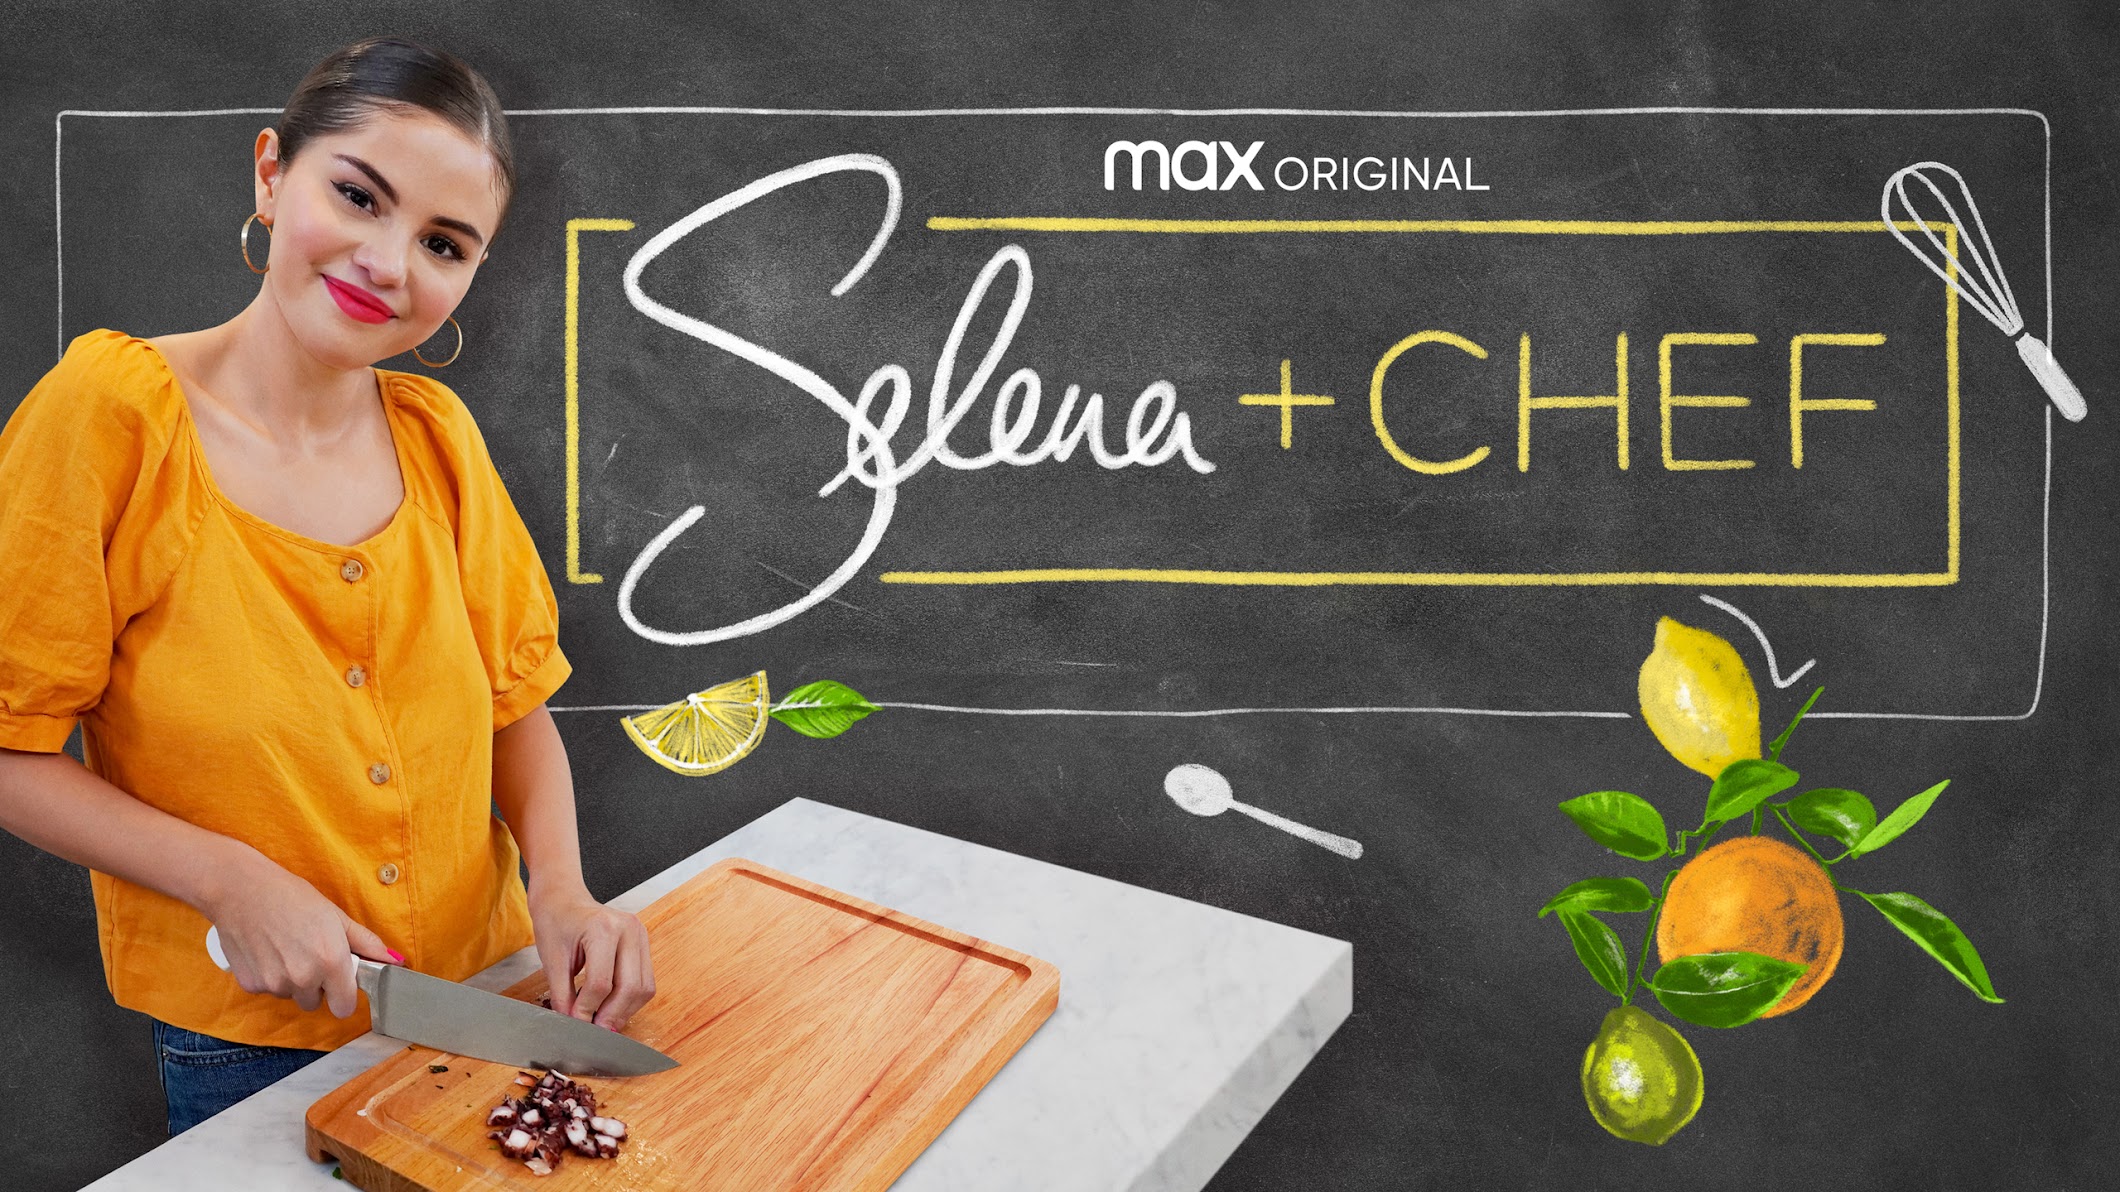 "Selena + Chef" title image for "Selena + Chef" Cookware blog post